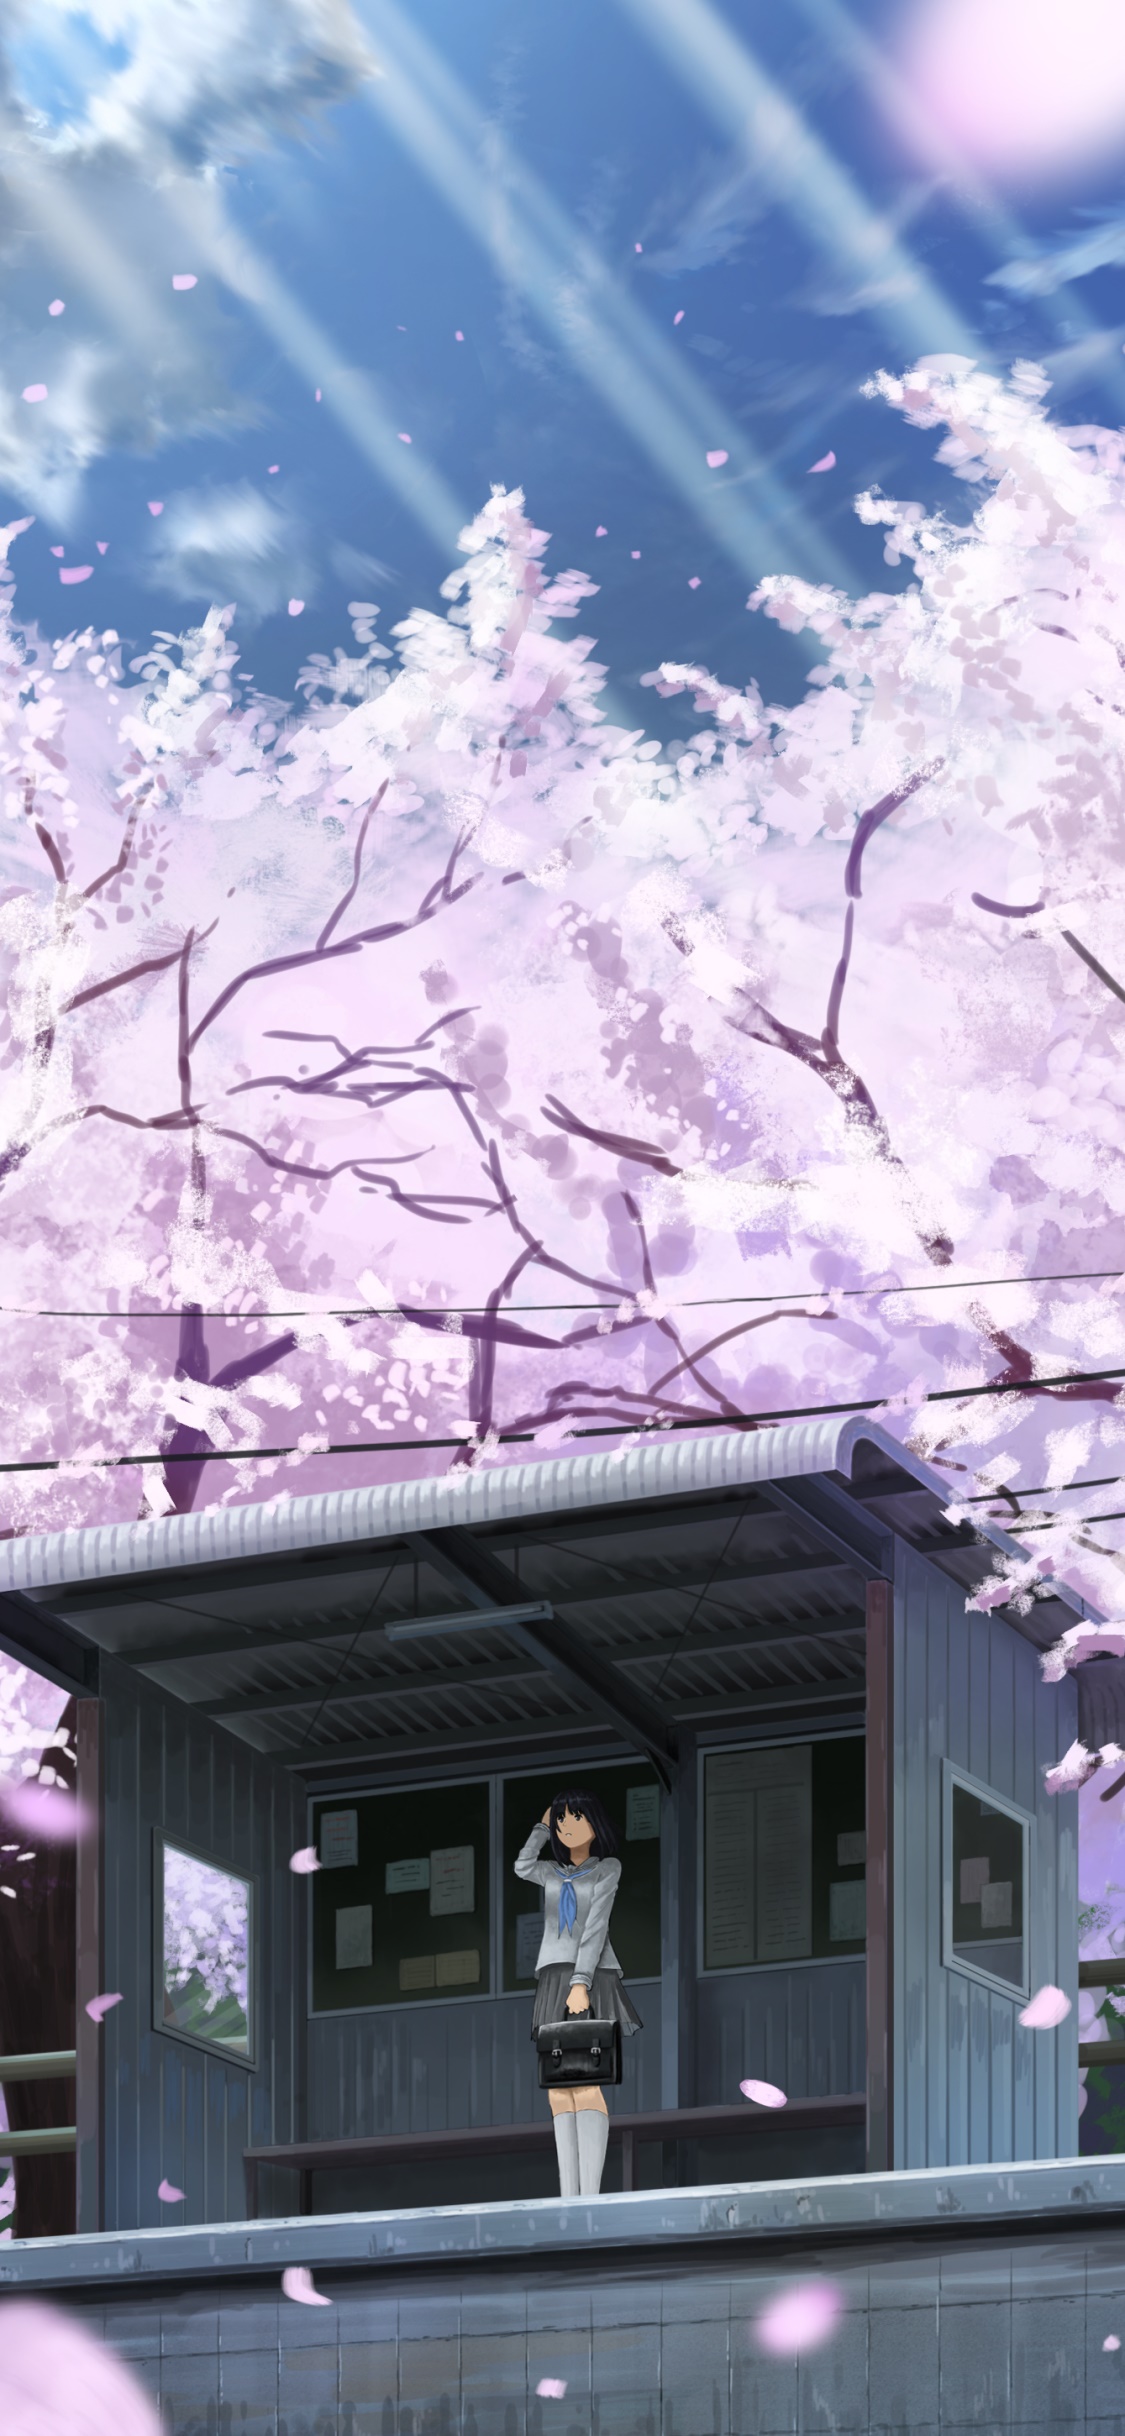 Wallpaper / Anime Original Phone Wallpaper, Cherry Blossom, Telephone Pole, Short Hair, Black Hair, 1125x2436 free download